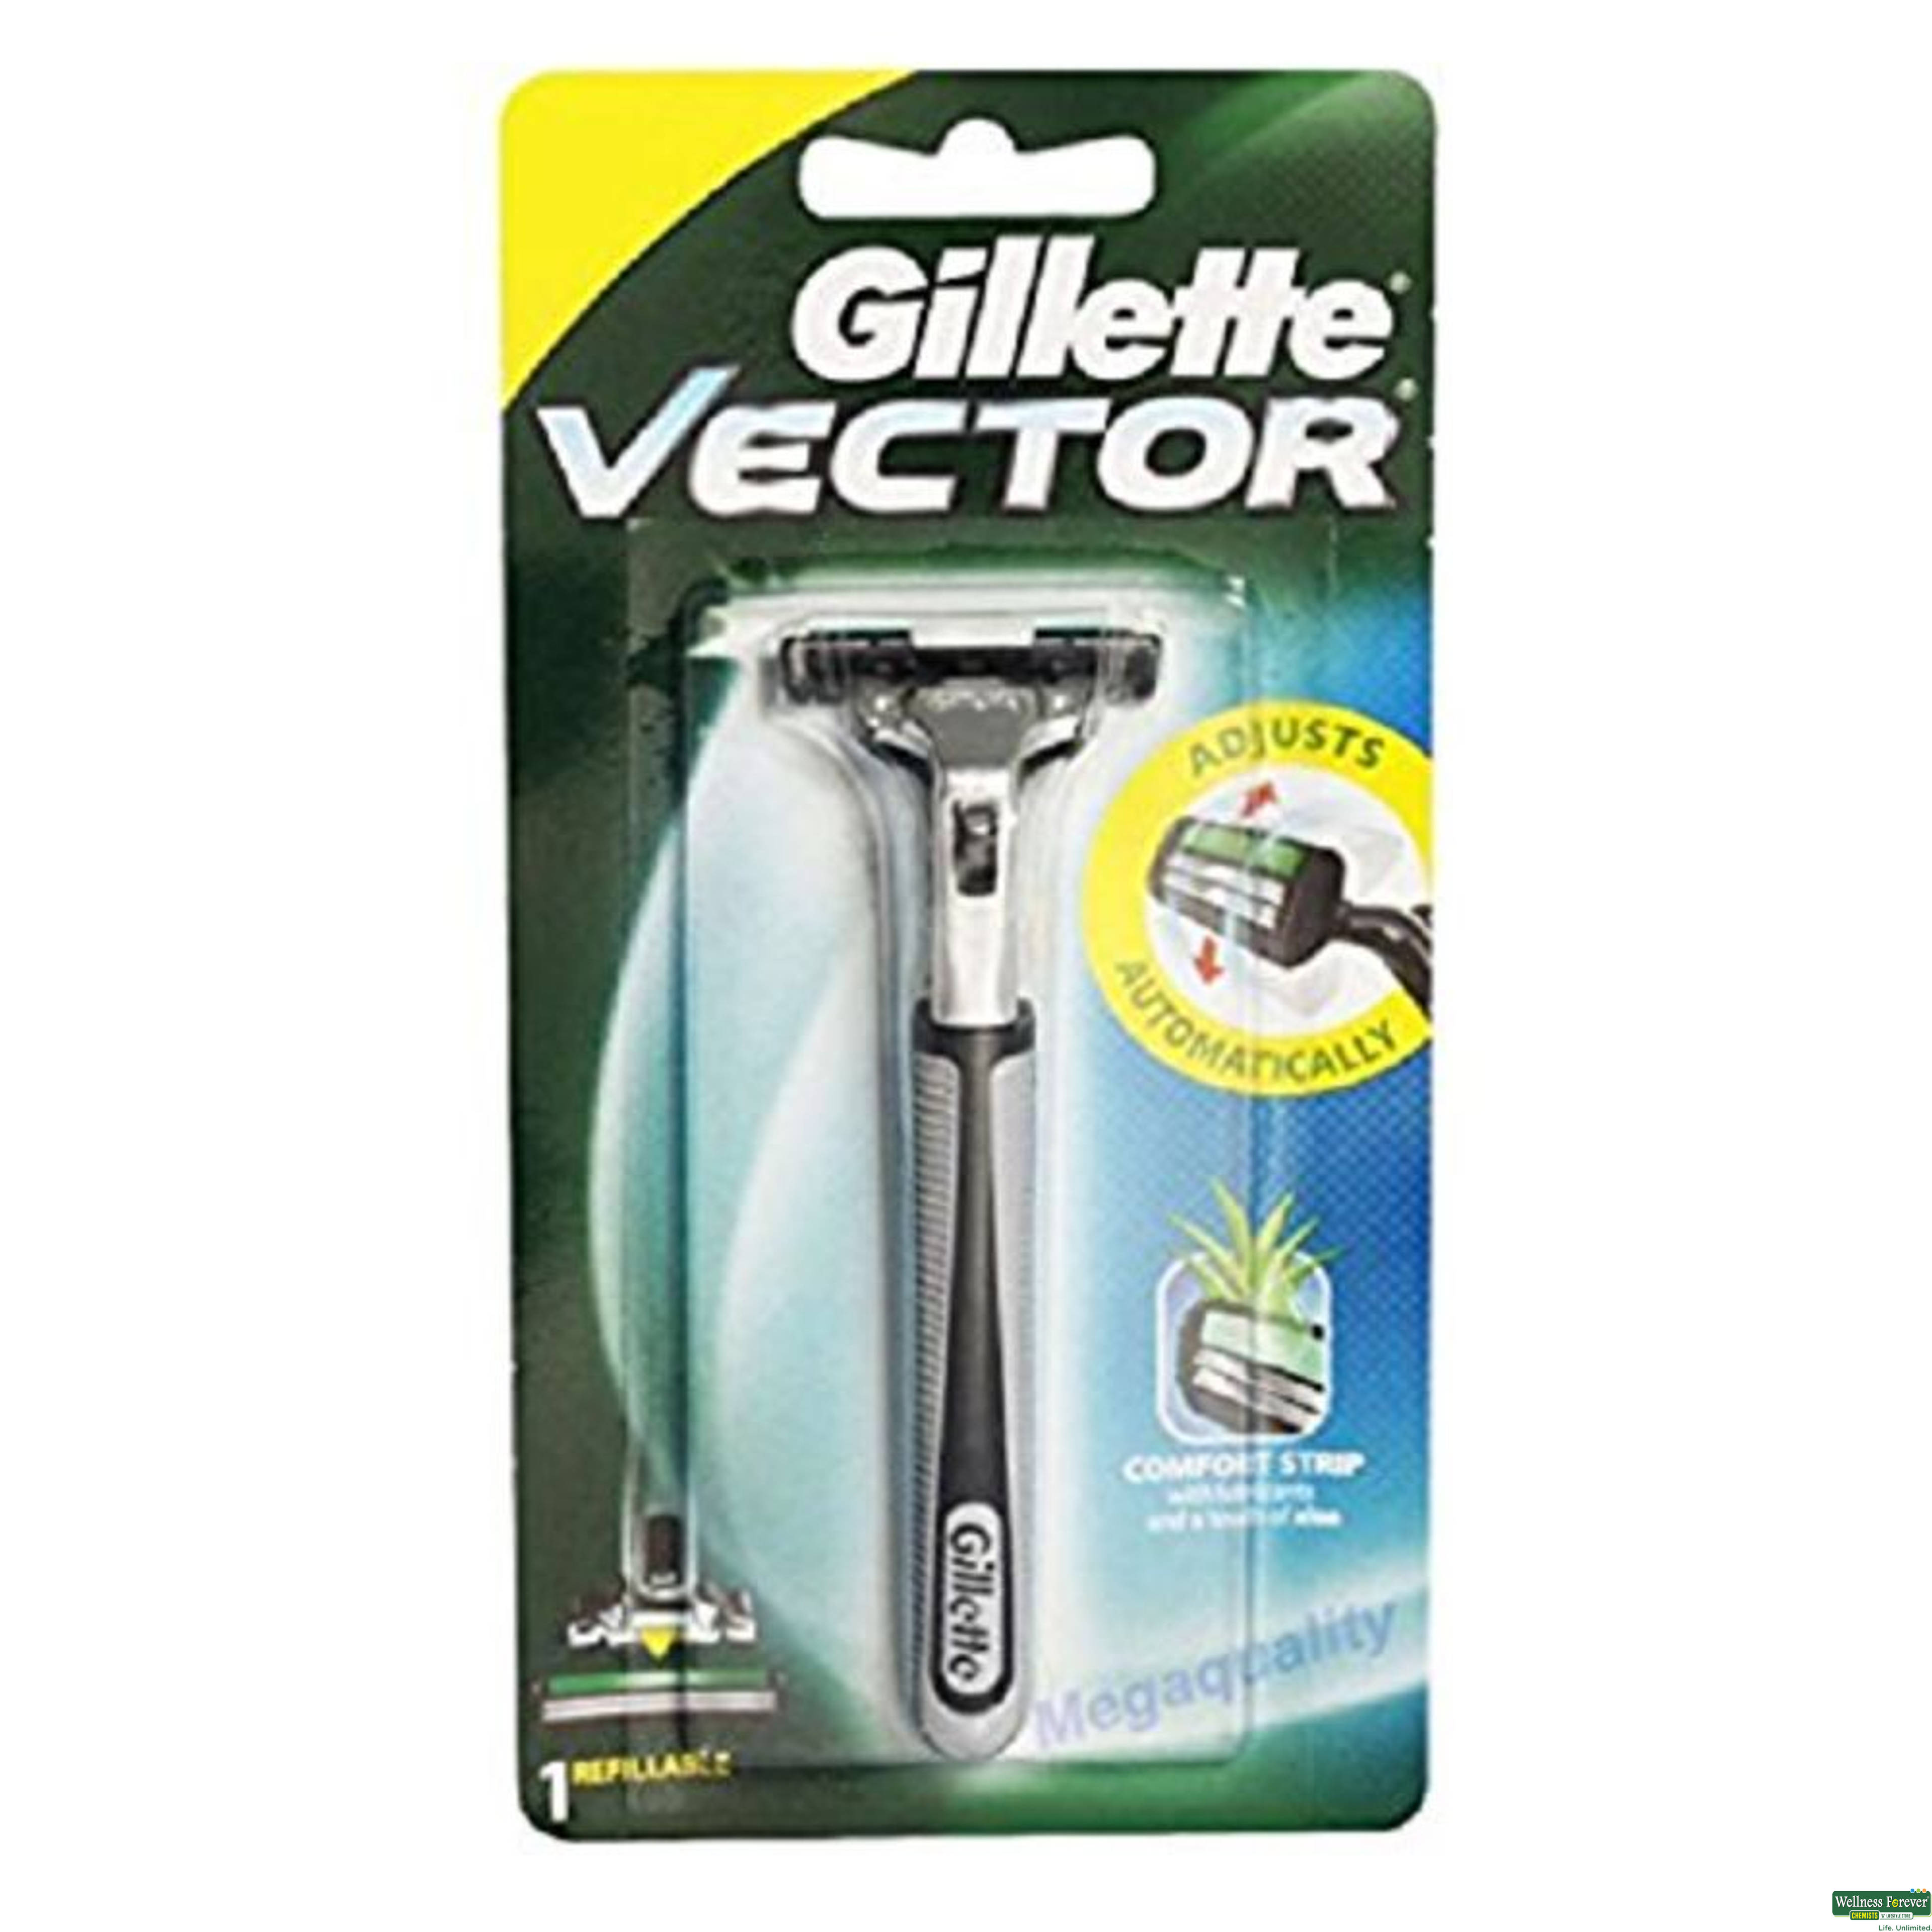 Gillette Vector Plus Manual Shaving Razor, 1 Piece-image